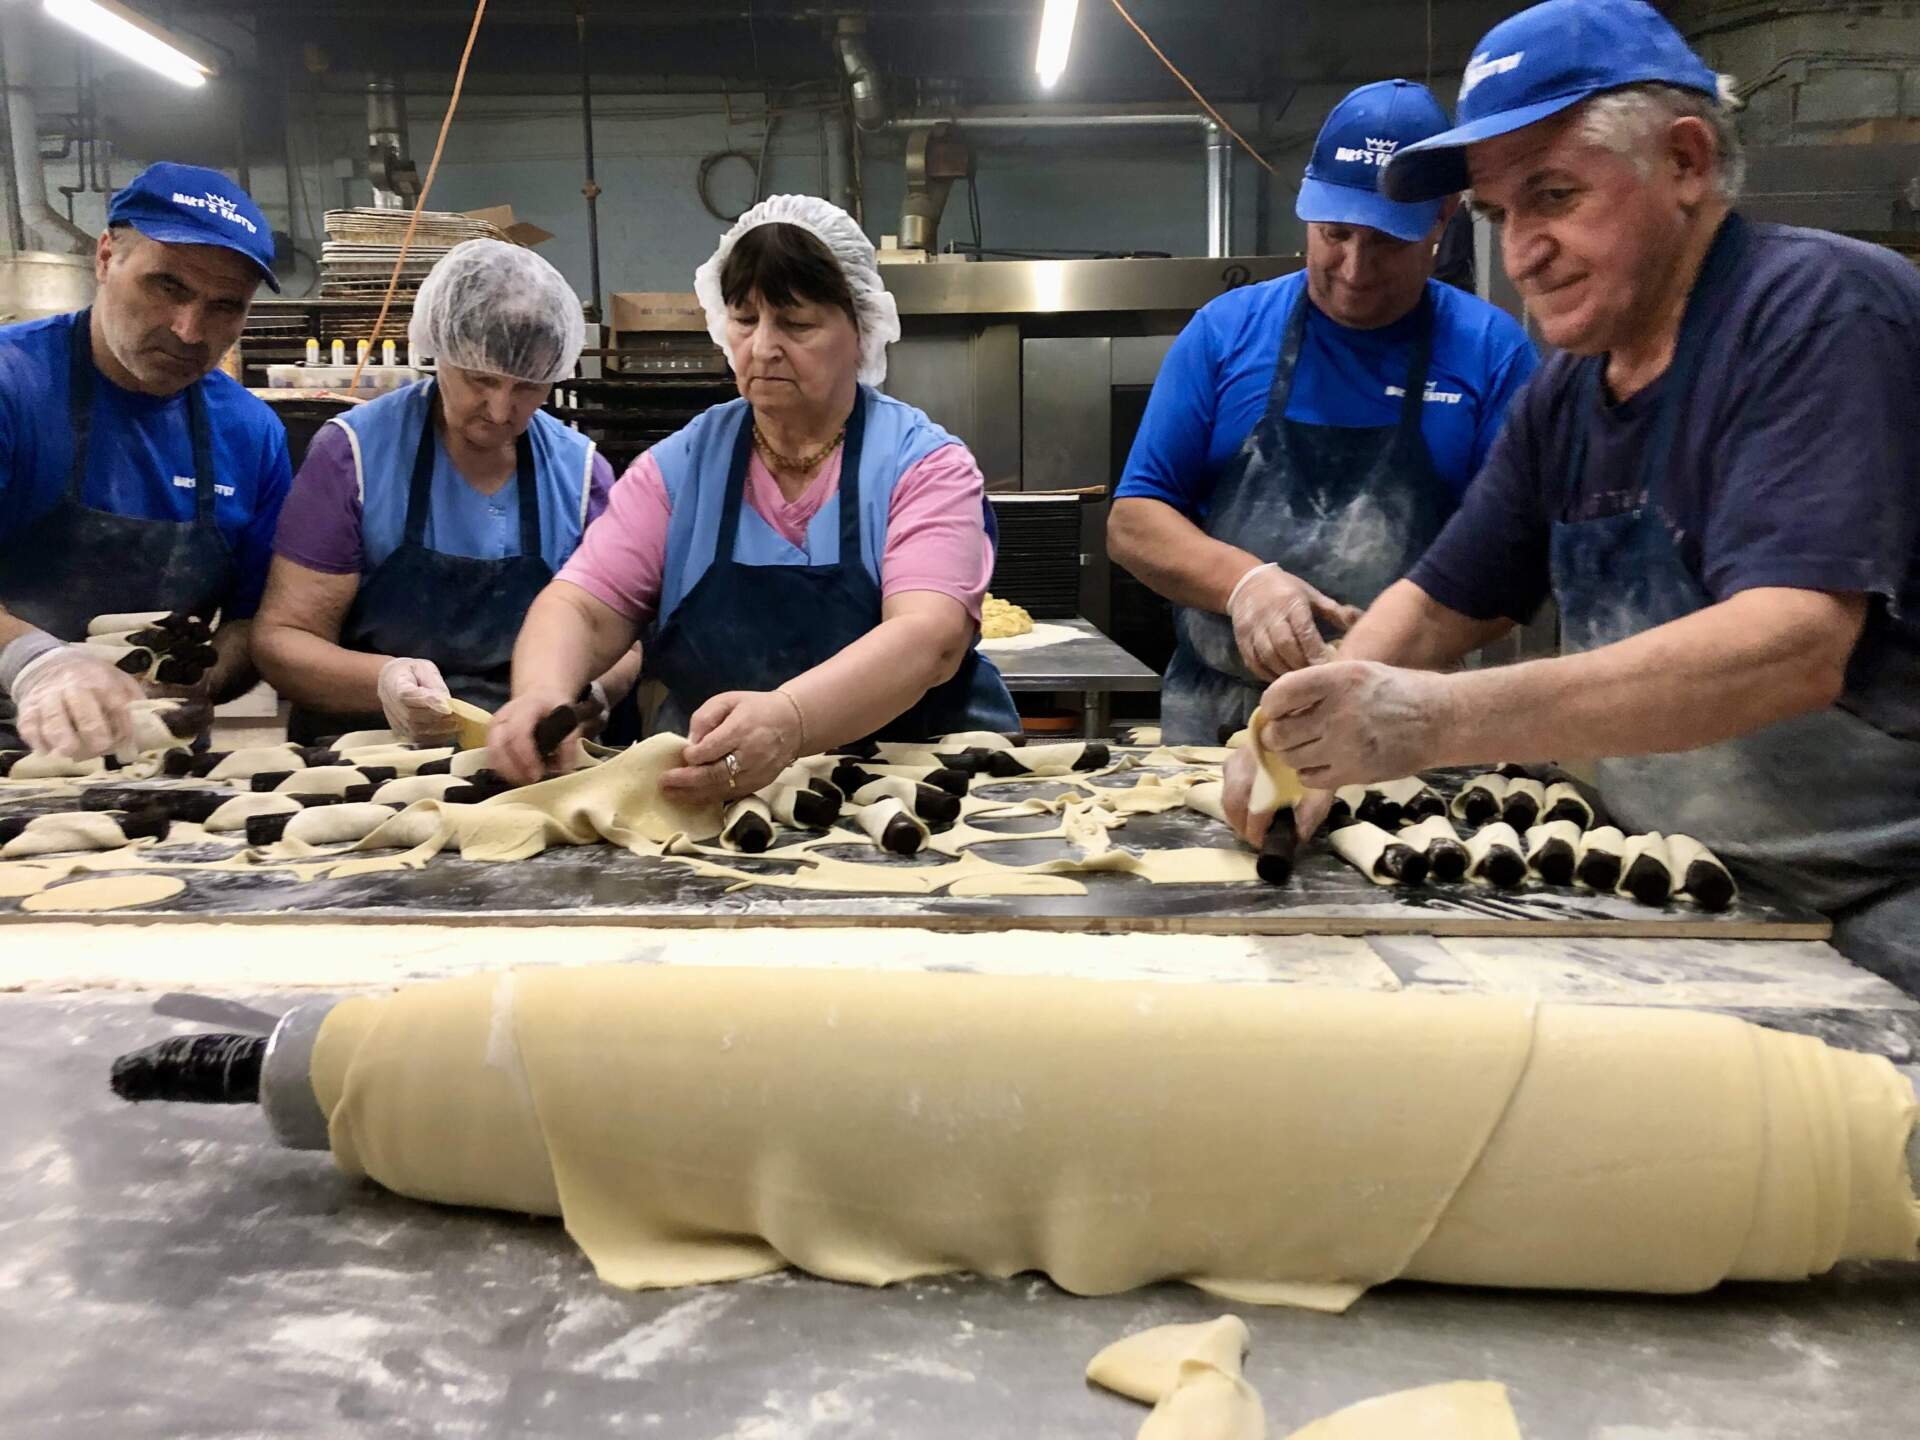 Employees at Mike's Pastry make traditional cannoli shells. (Lynn Jolicoeur/WBUR)